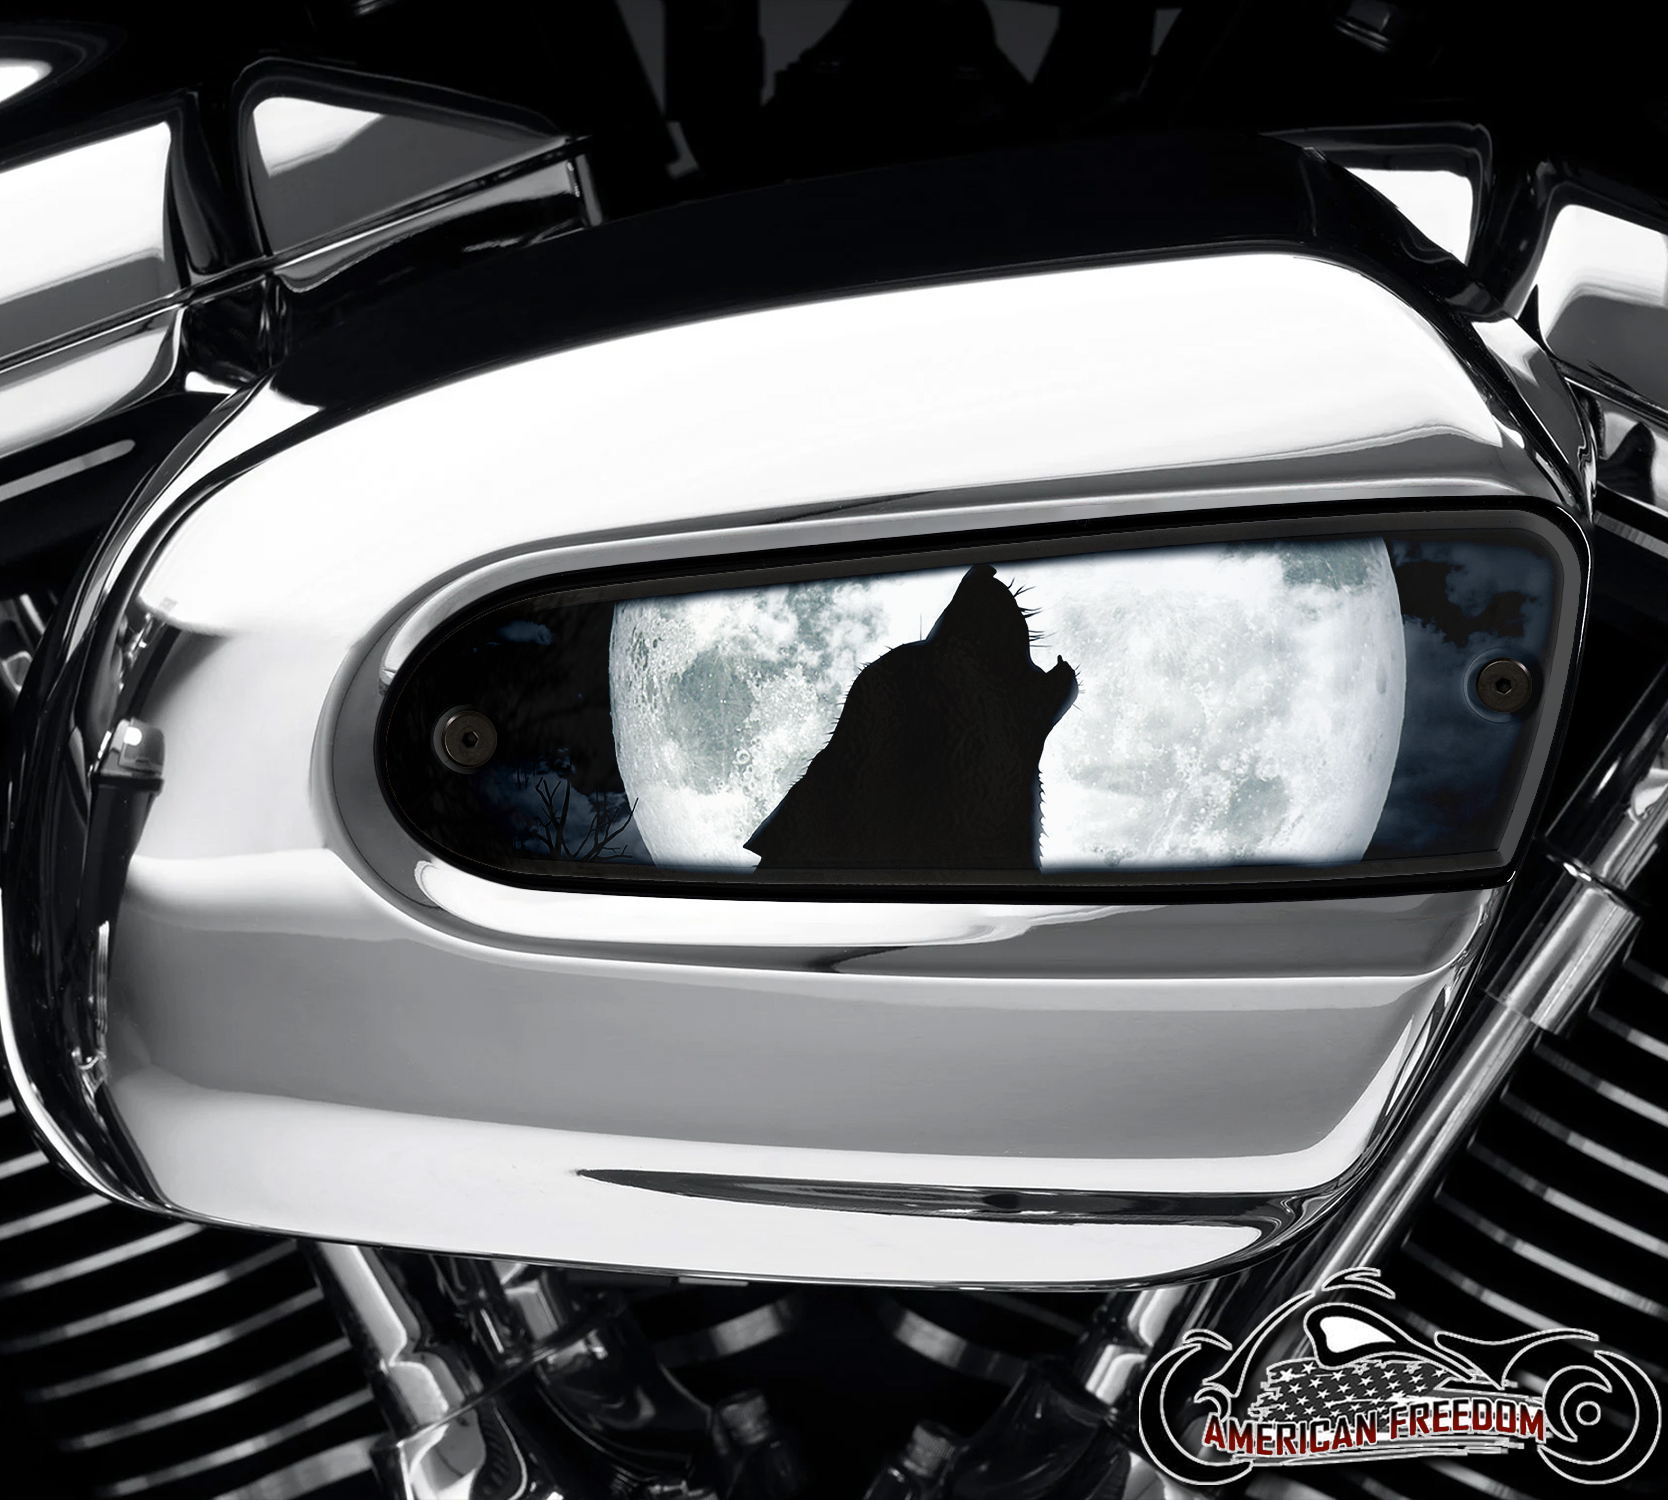 Harley Davidson Wedge Air Cleaner Insert - Wolf Moon